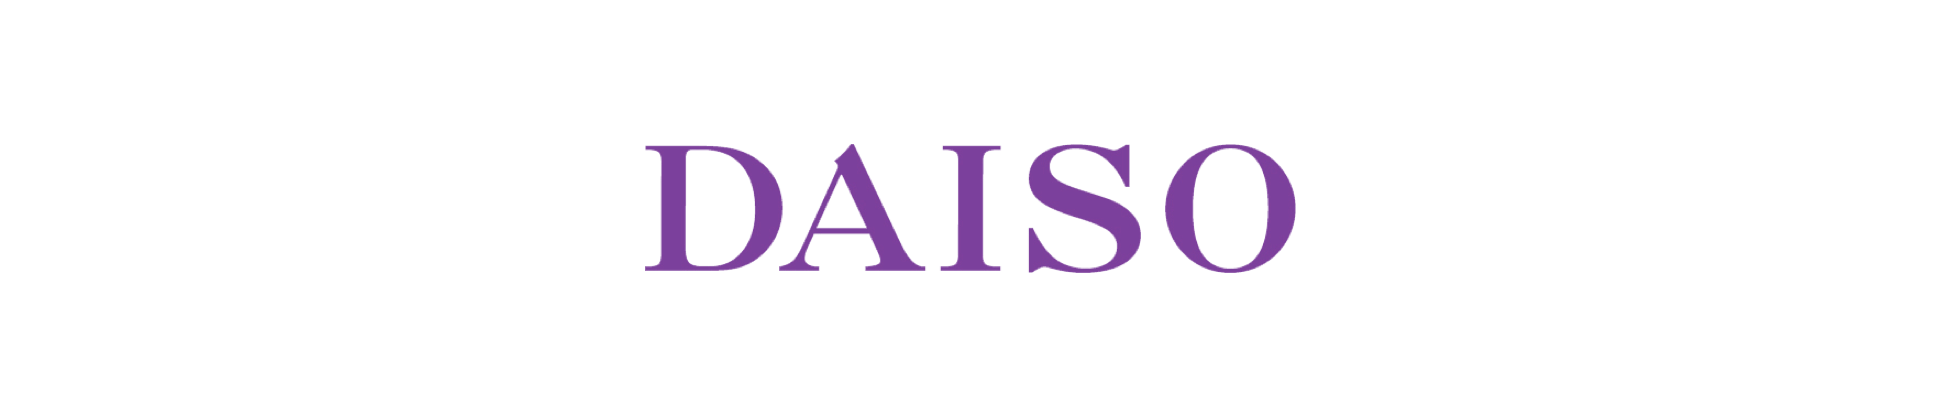 Daiso Australia - GMG Digital